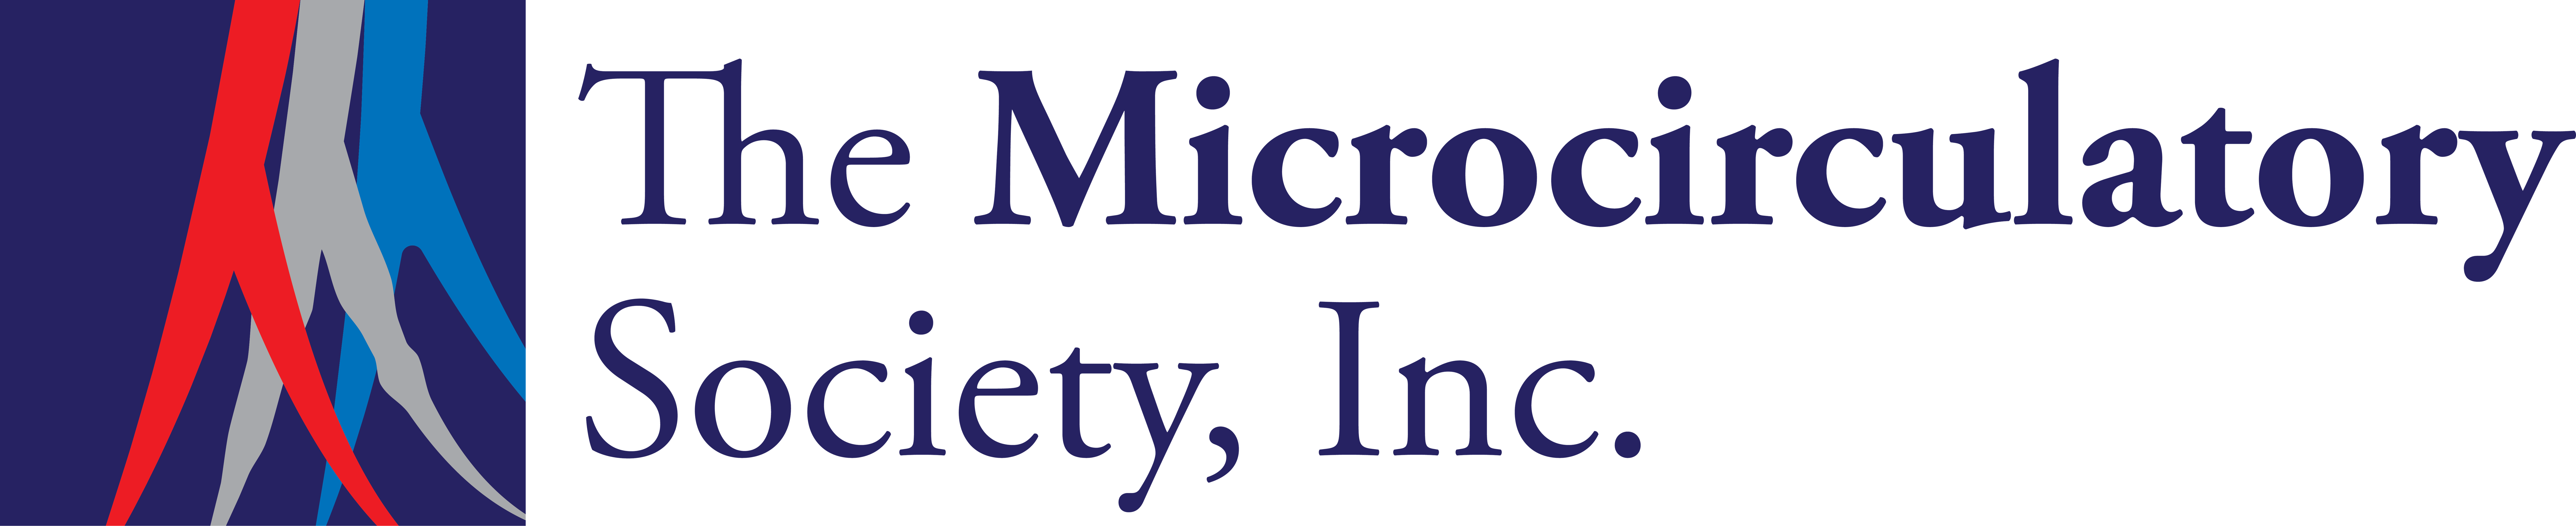 Microcirculatory Society